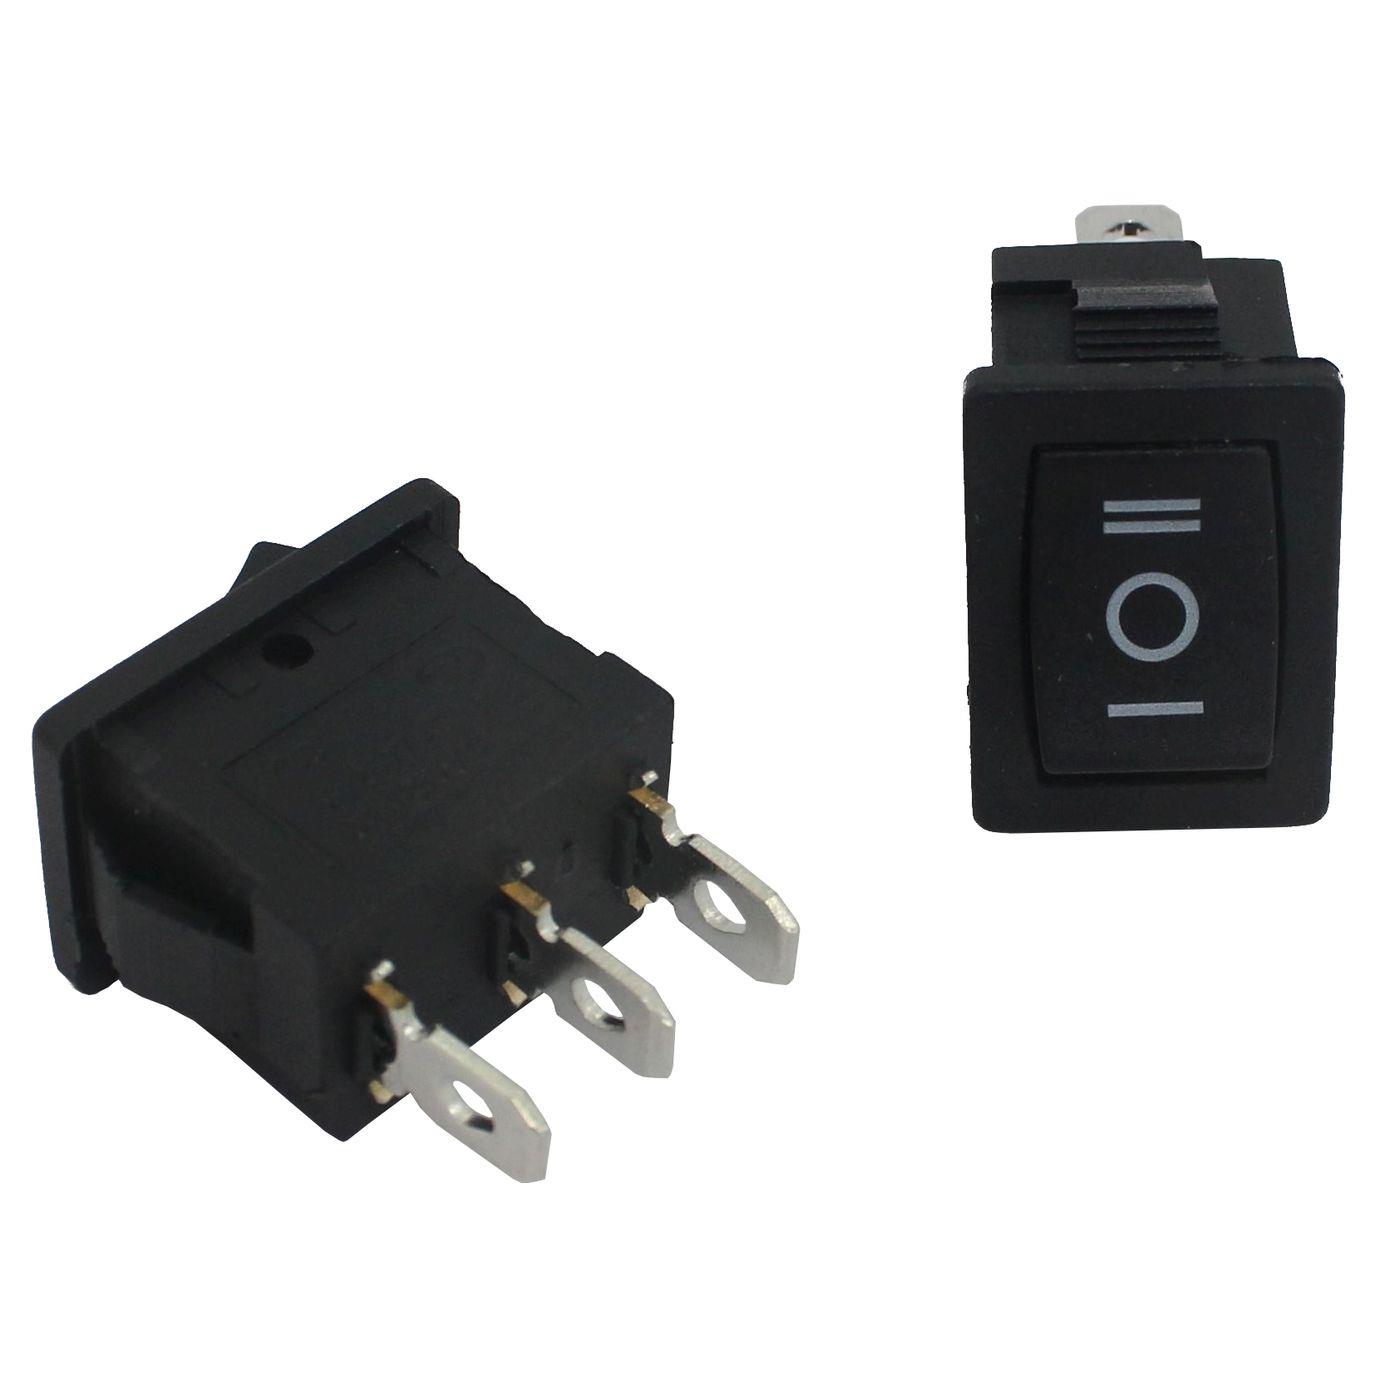 5x Toggle switch 1pole 250V 6A I-0-II 21x15mm Black Rocker switch